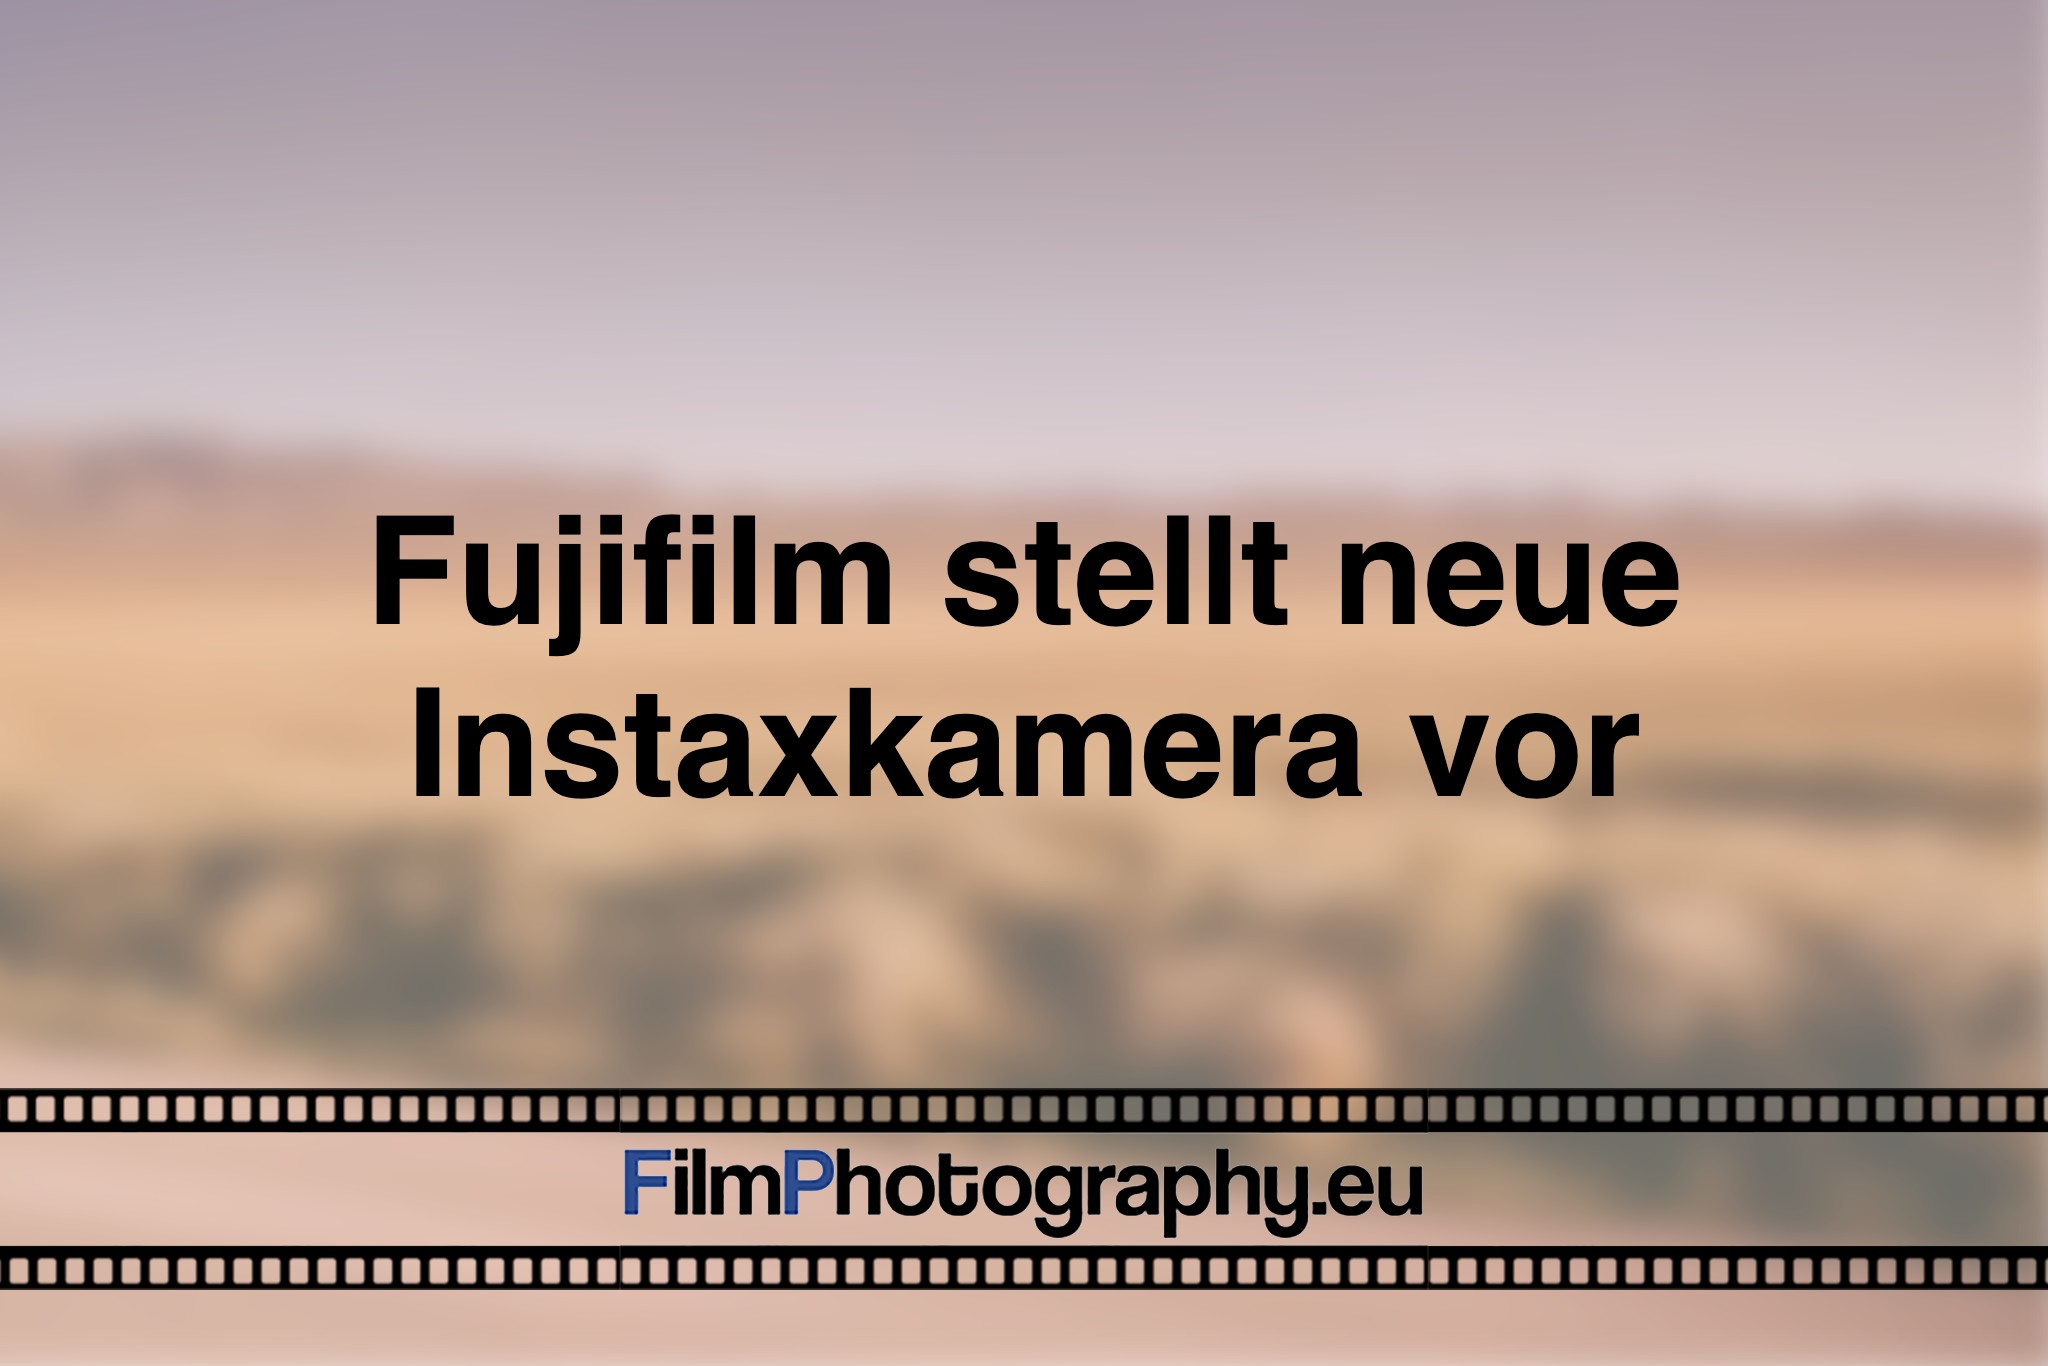 fujifilm-stellt-neue-instaxkamera-vor-photo-bnv